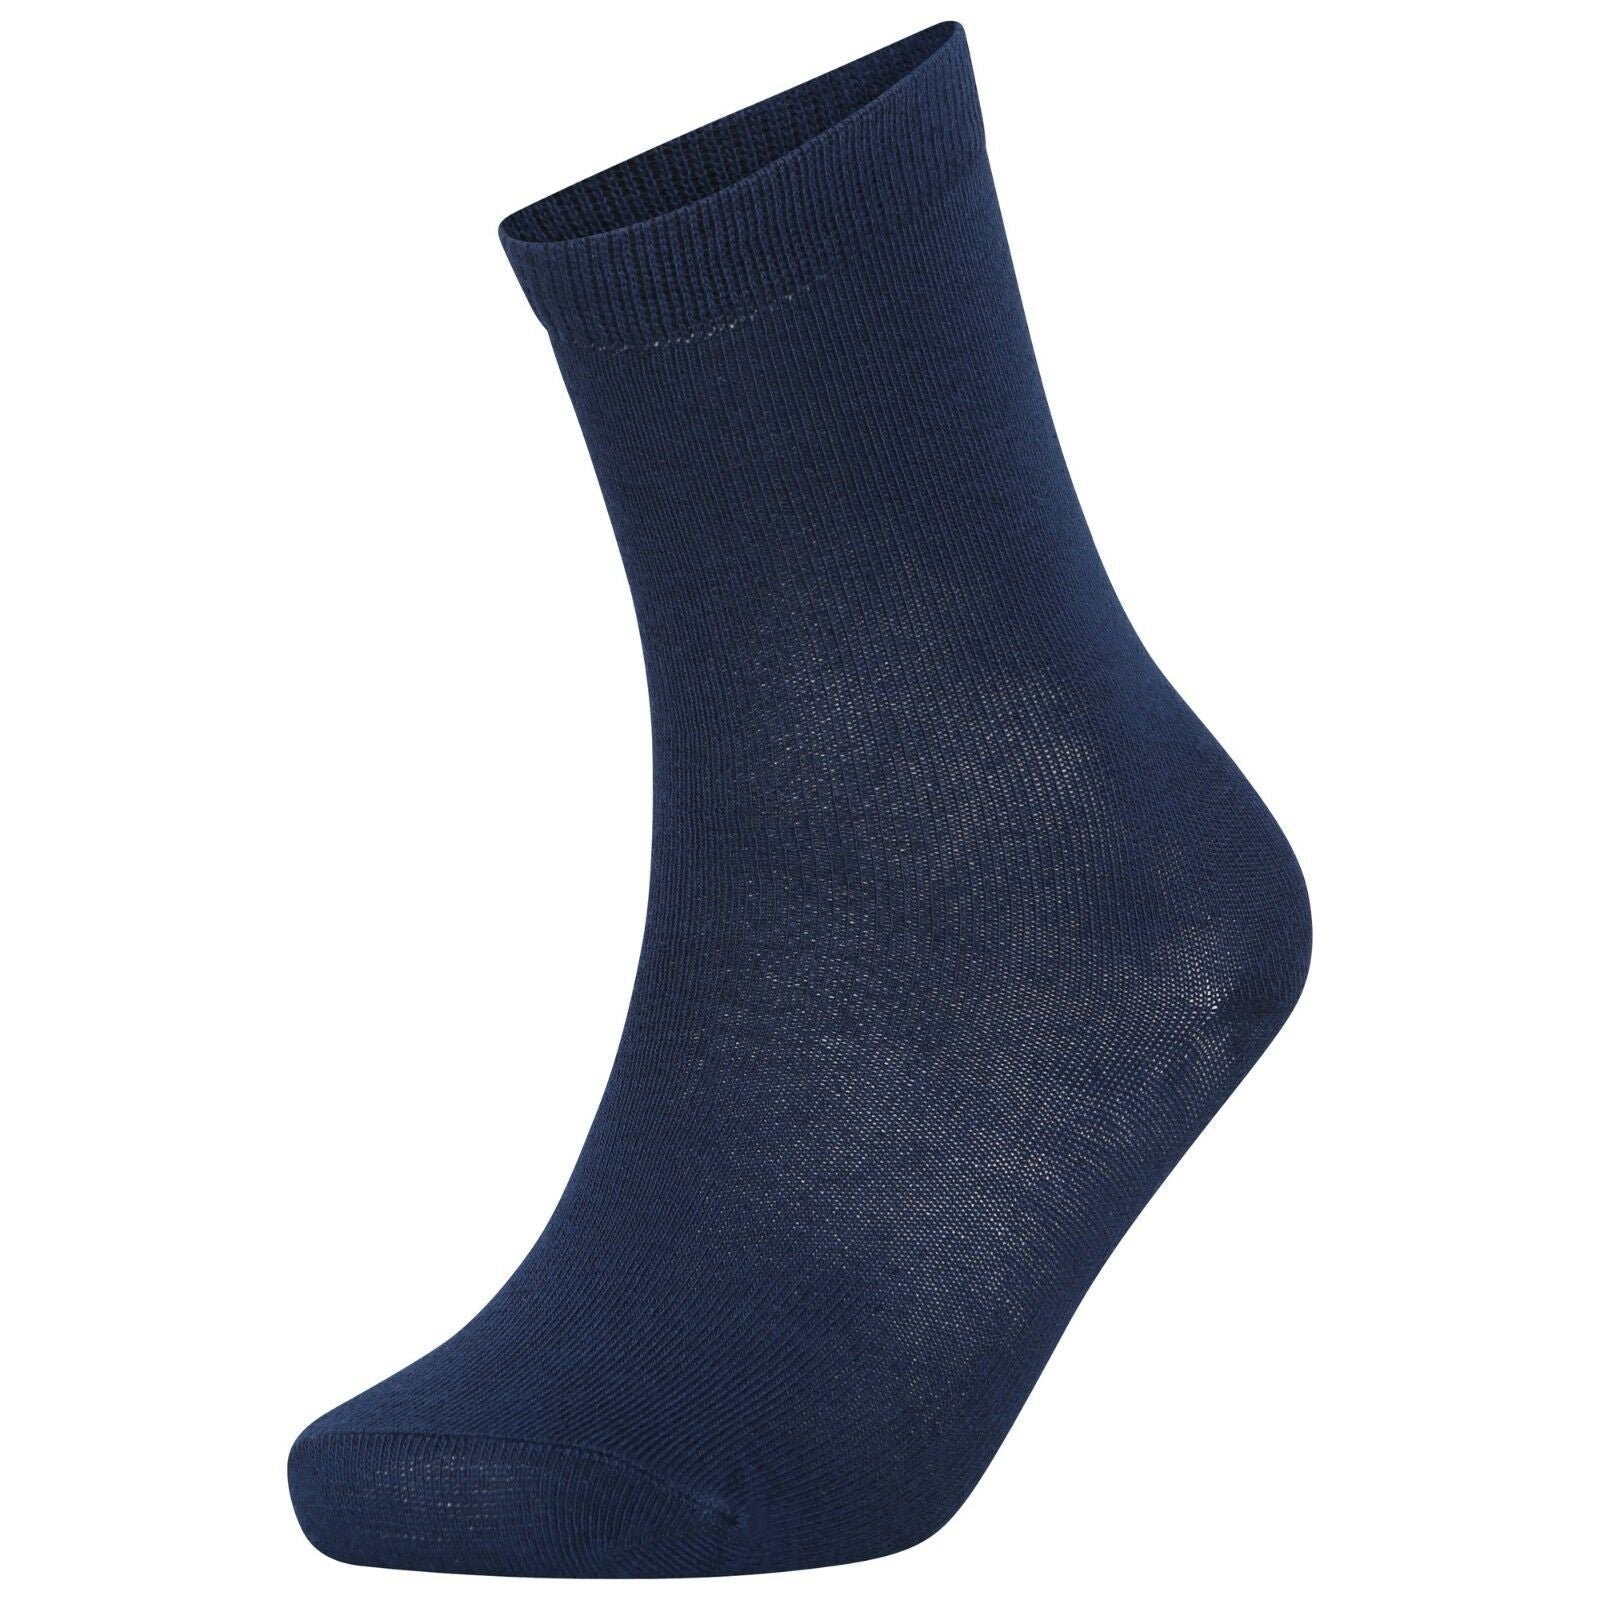 9 Pairs Girls Boys Unisex Children's Kids Ankle Socks Plain Cotton Mix  Back to School Socks -Navy Blue